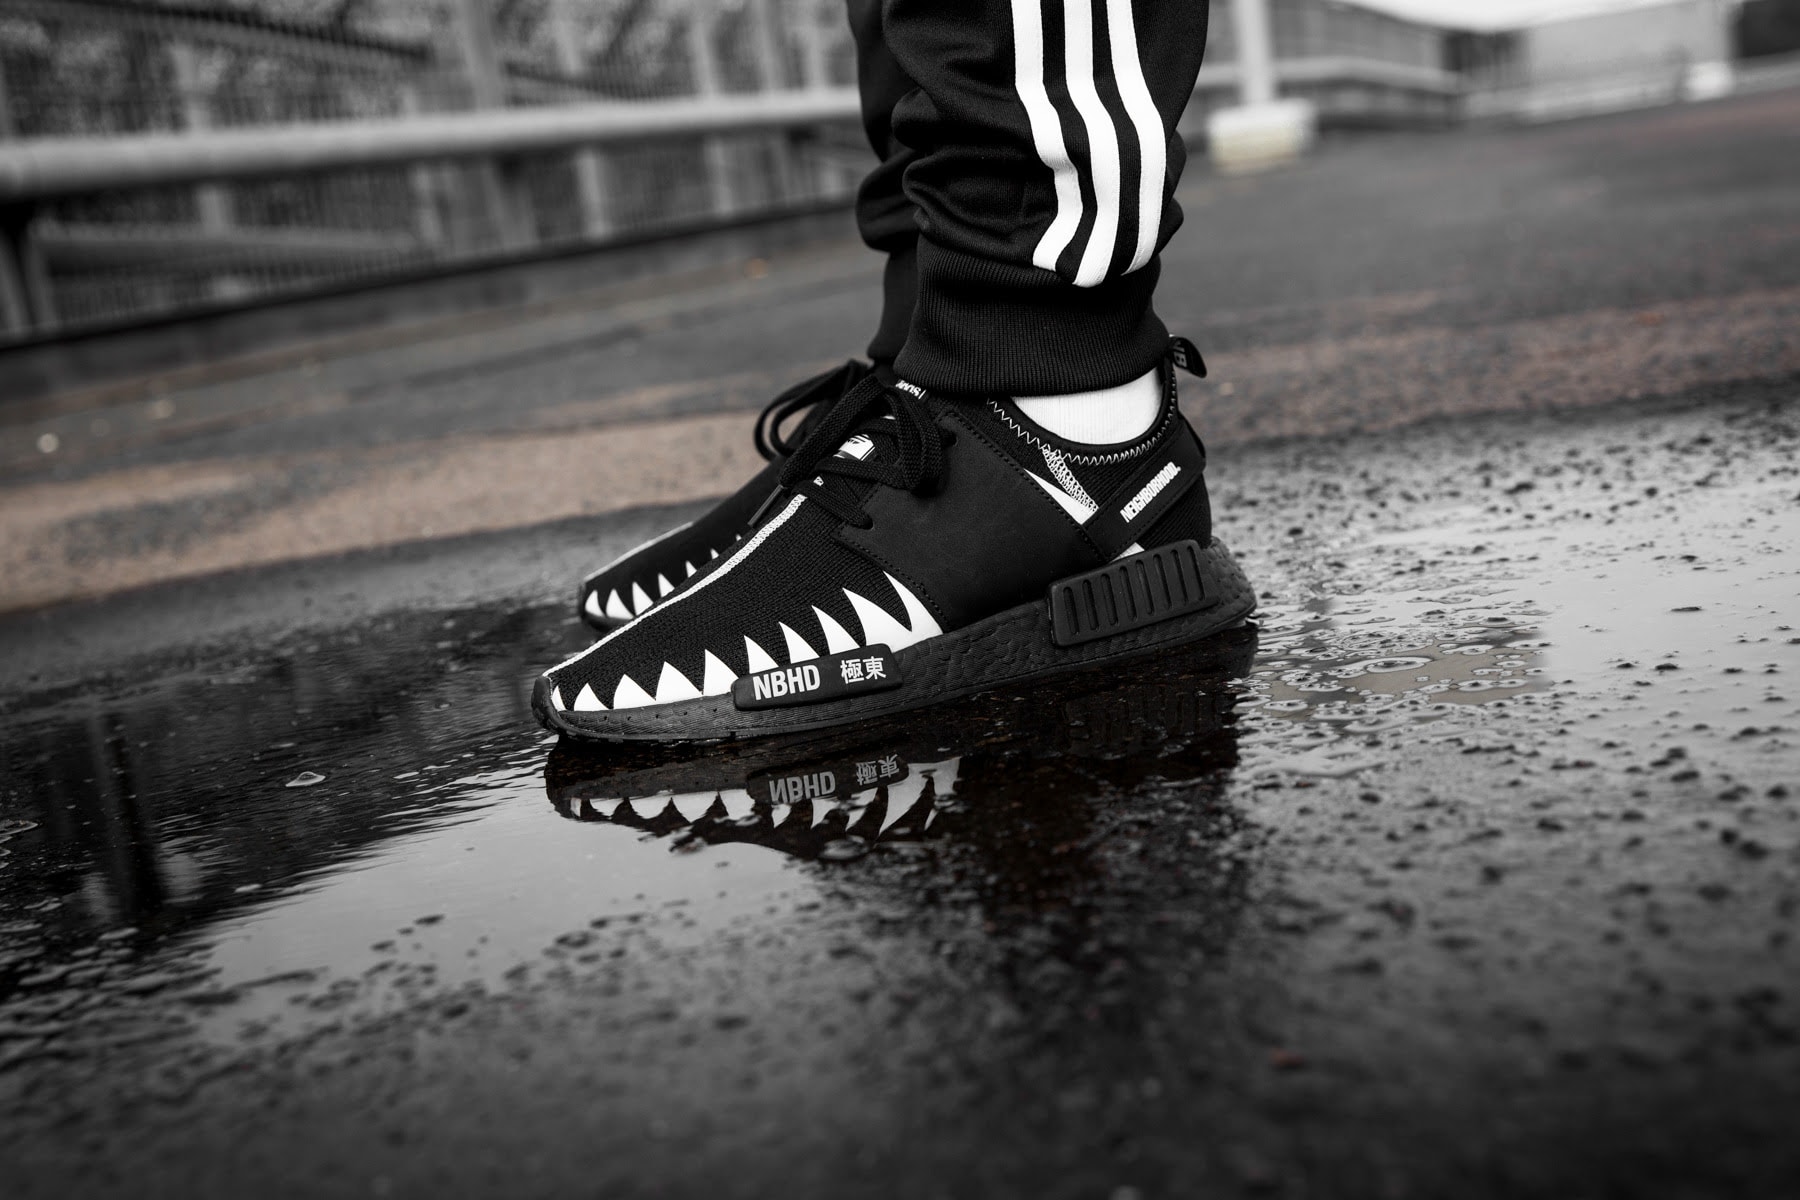 dreng Fysik sælge adidas Originals x NEIGHBORHOOD On-Feet Photos | Hypebeast